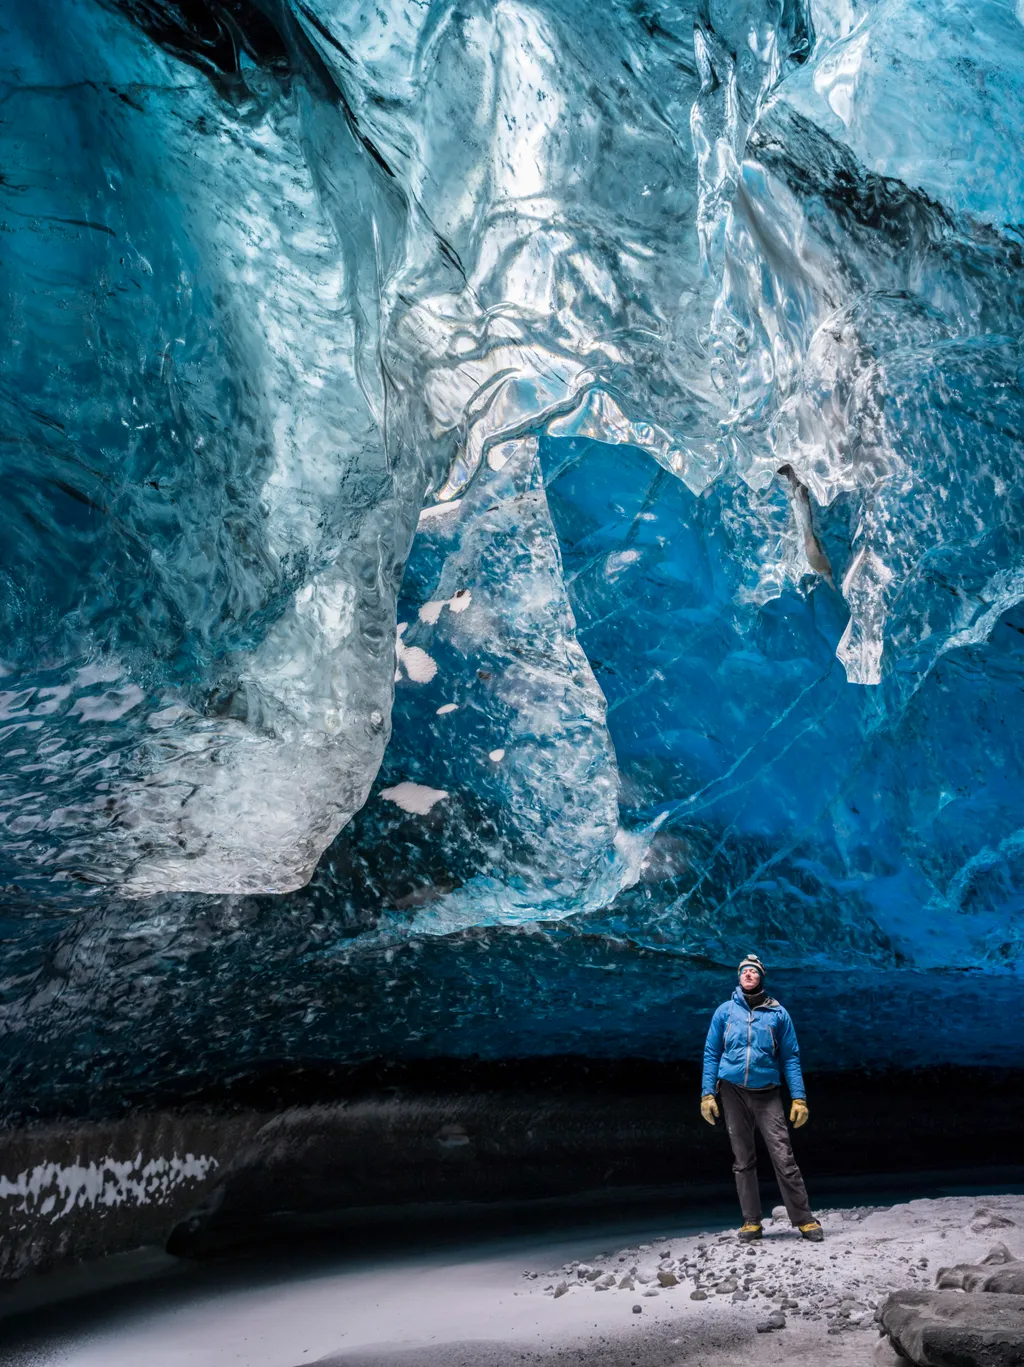 Vatnatjökull-gleccser jégbarlang Izland 